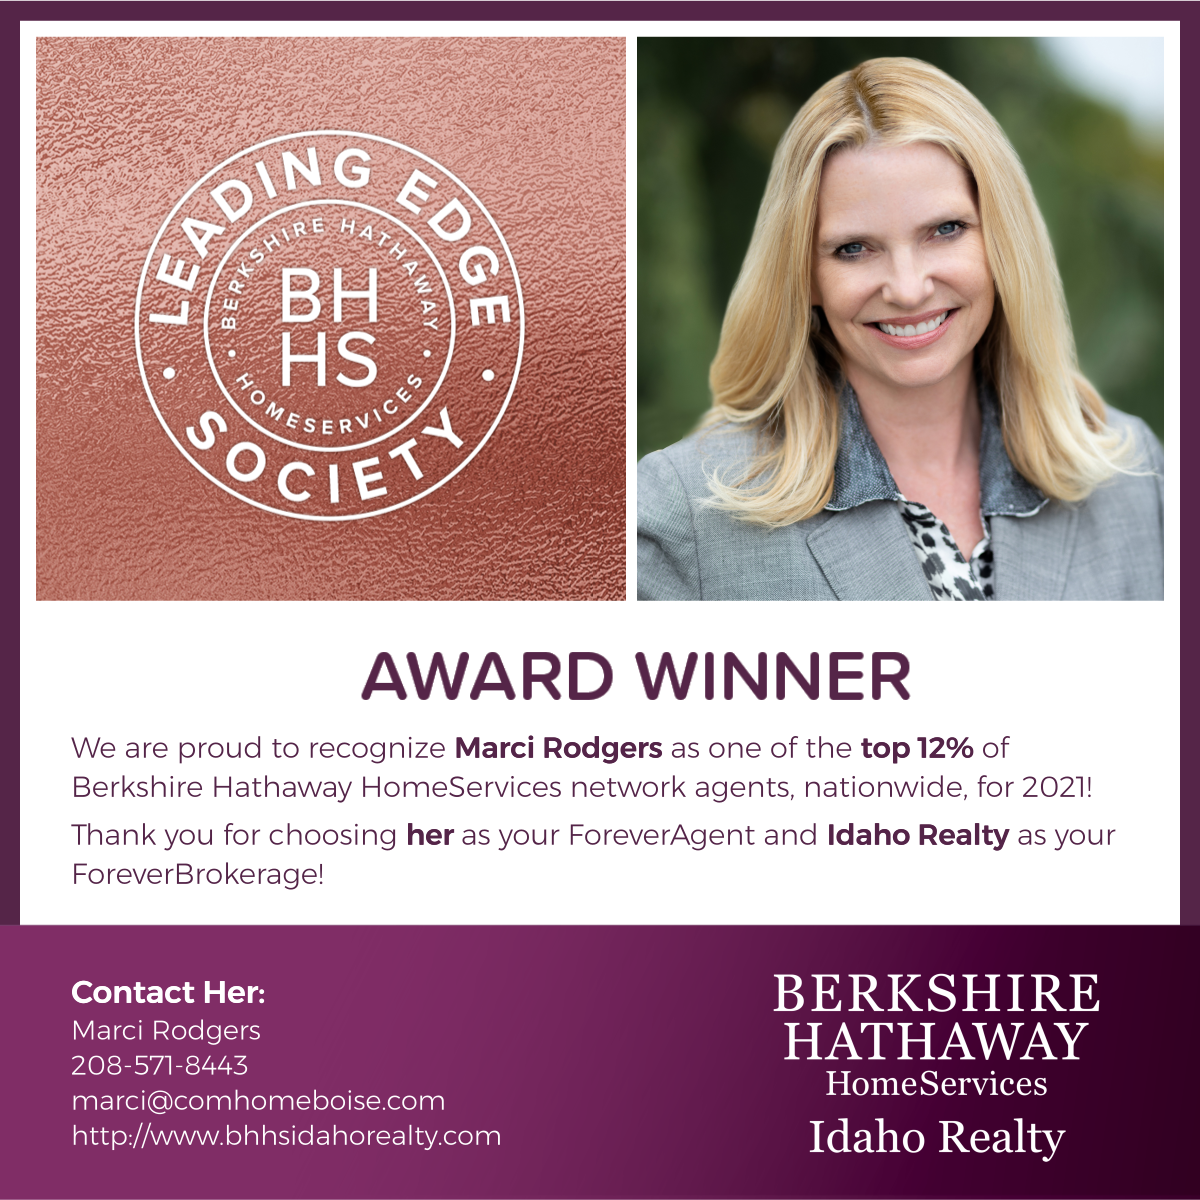 BHHS Threshold Award Winner - Leading Edge Society Award - Marci Rodgers